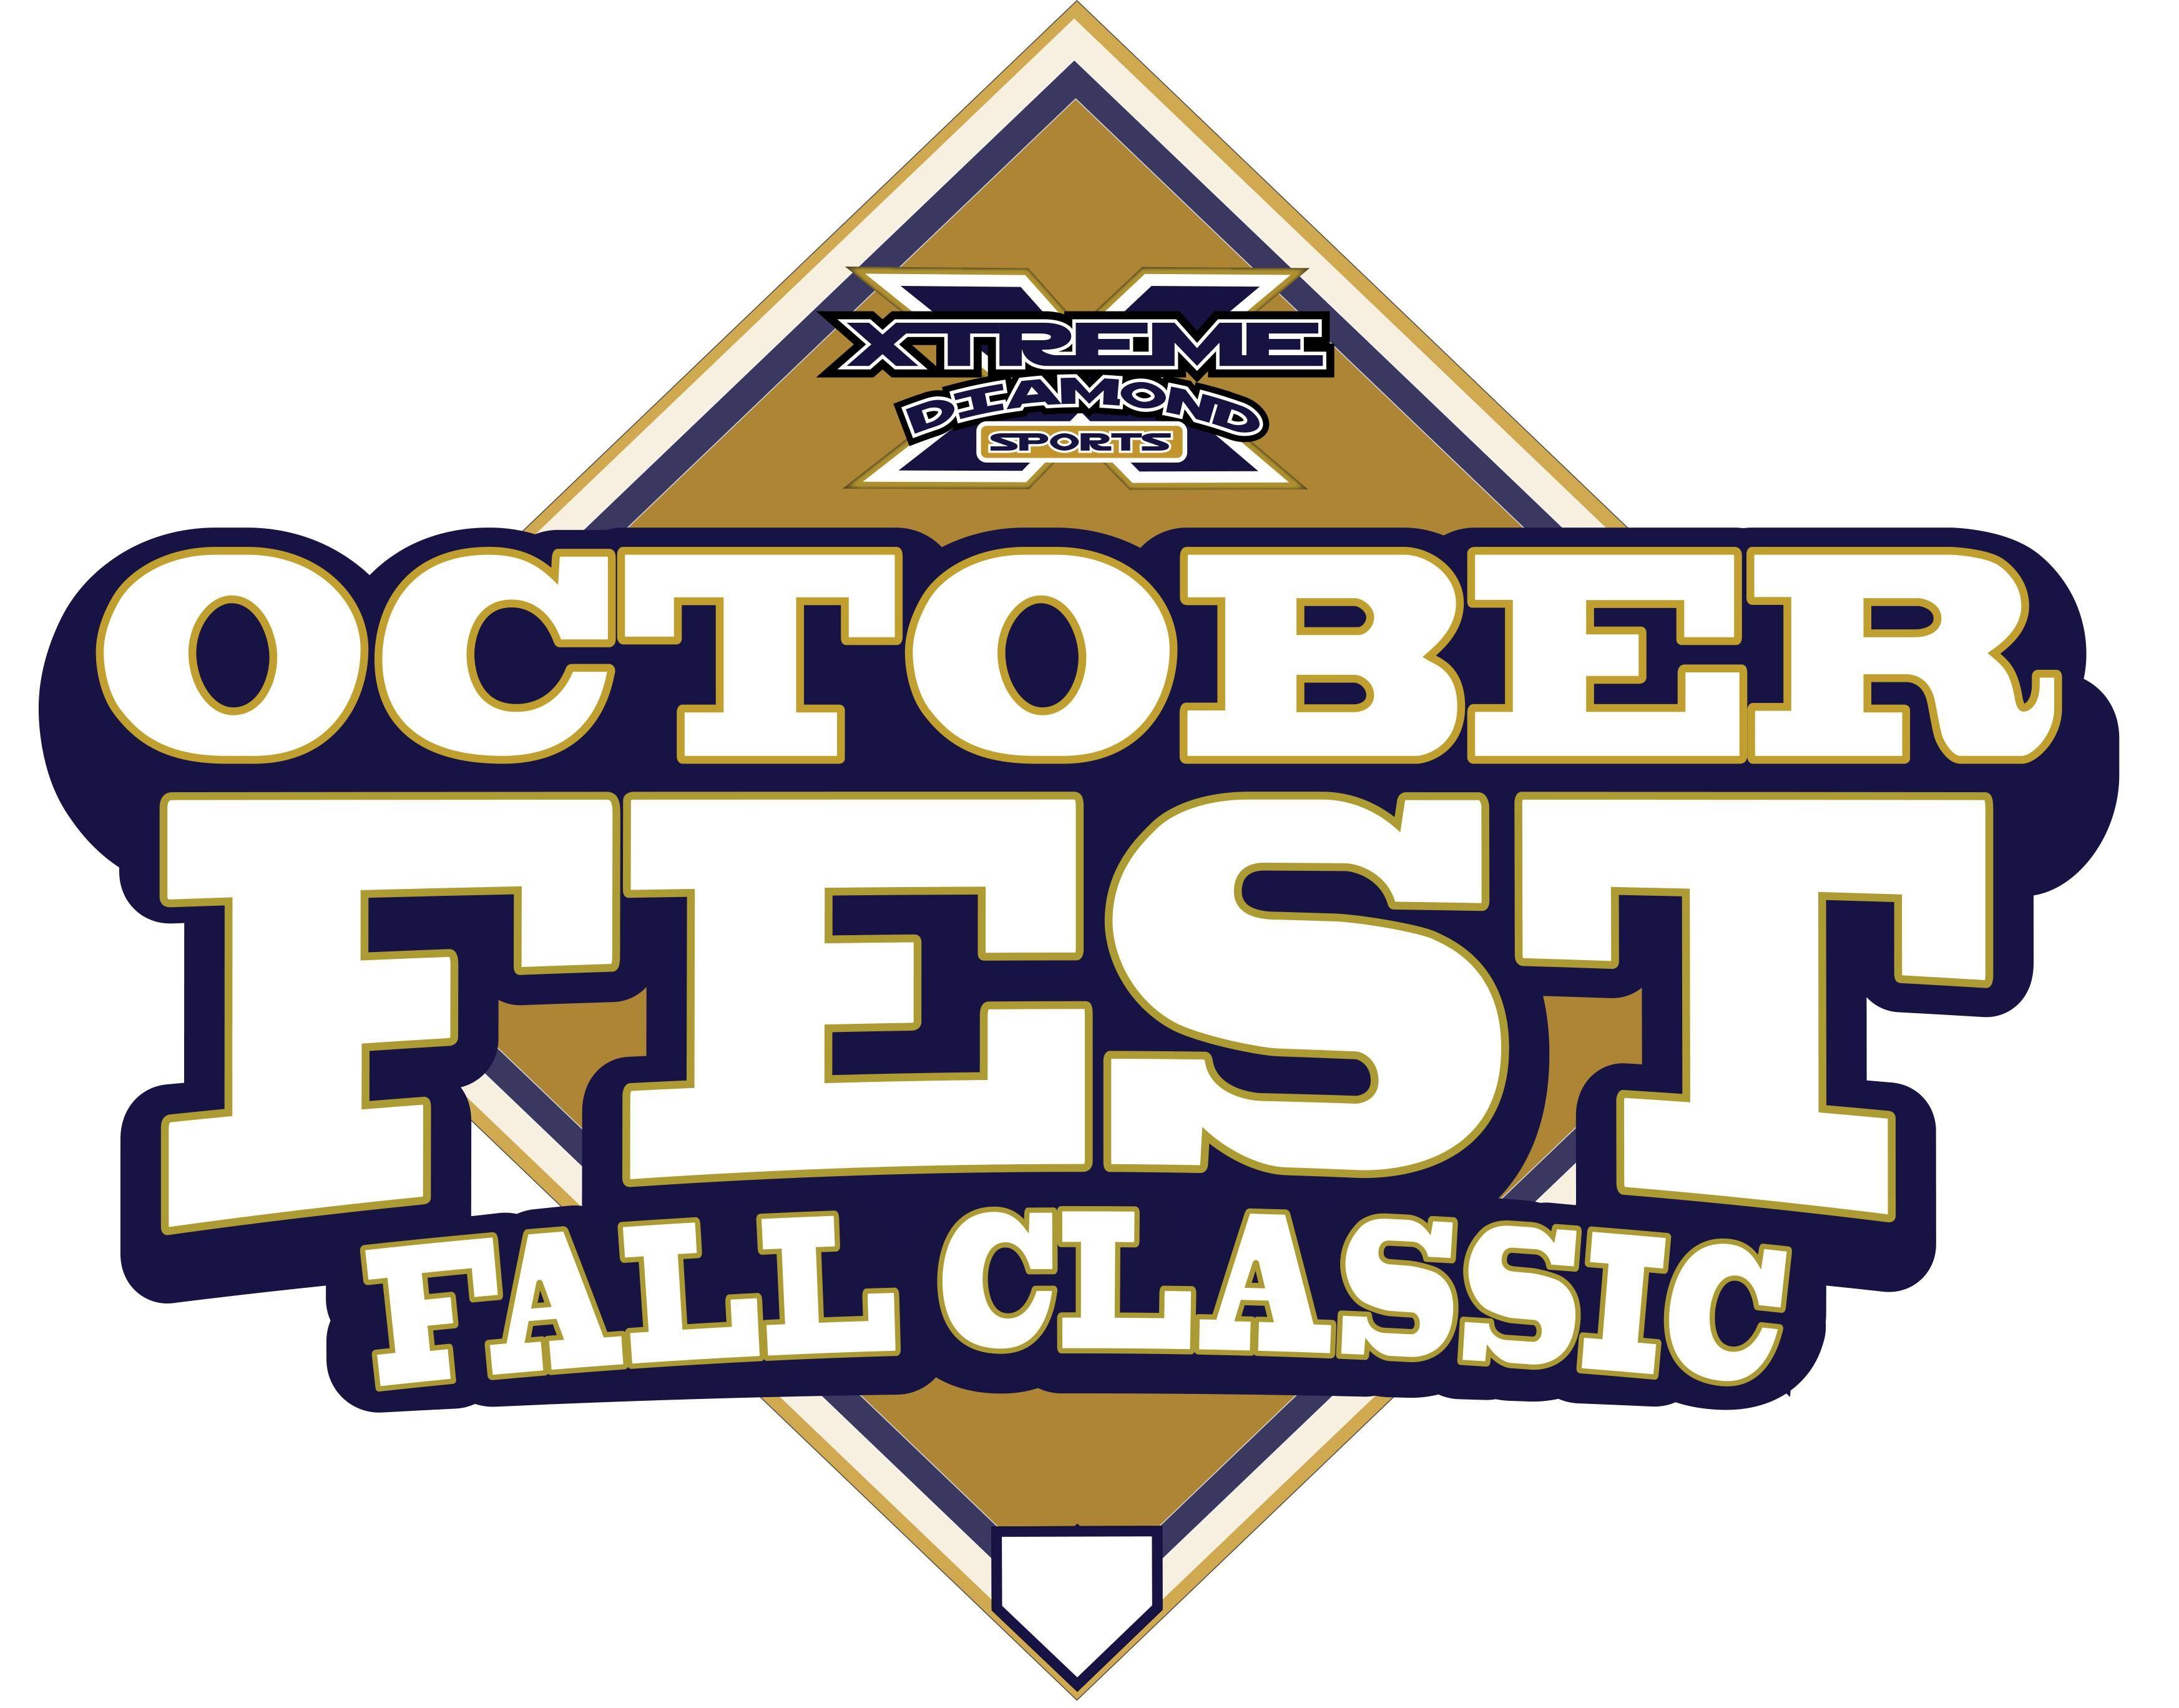 Spots Triangles Baseball Logo - So Cal Baseball October 13 - 14, 2018 Octoberfest Fall Classic